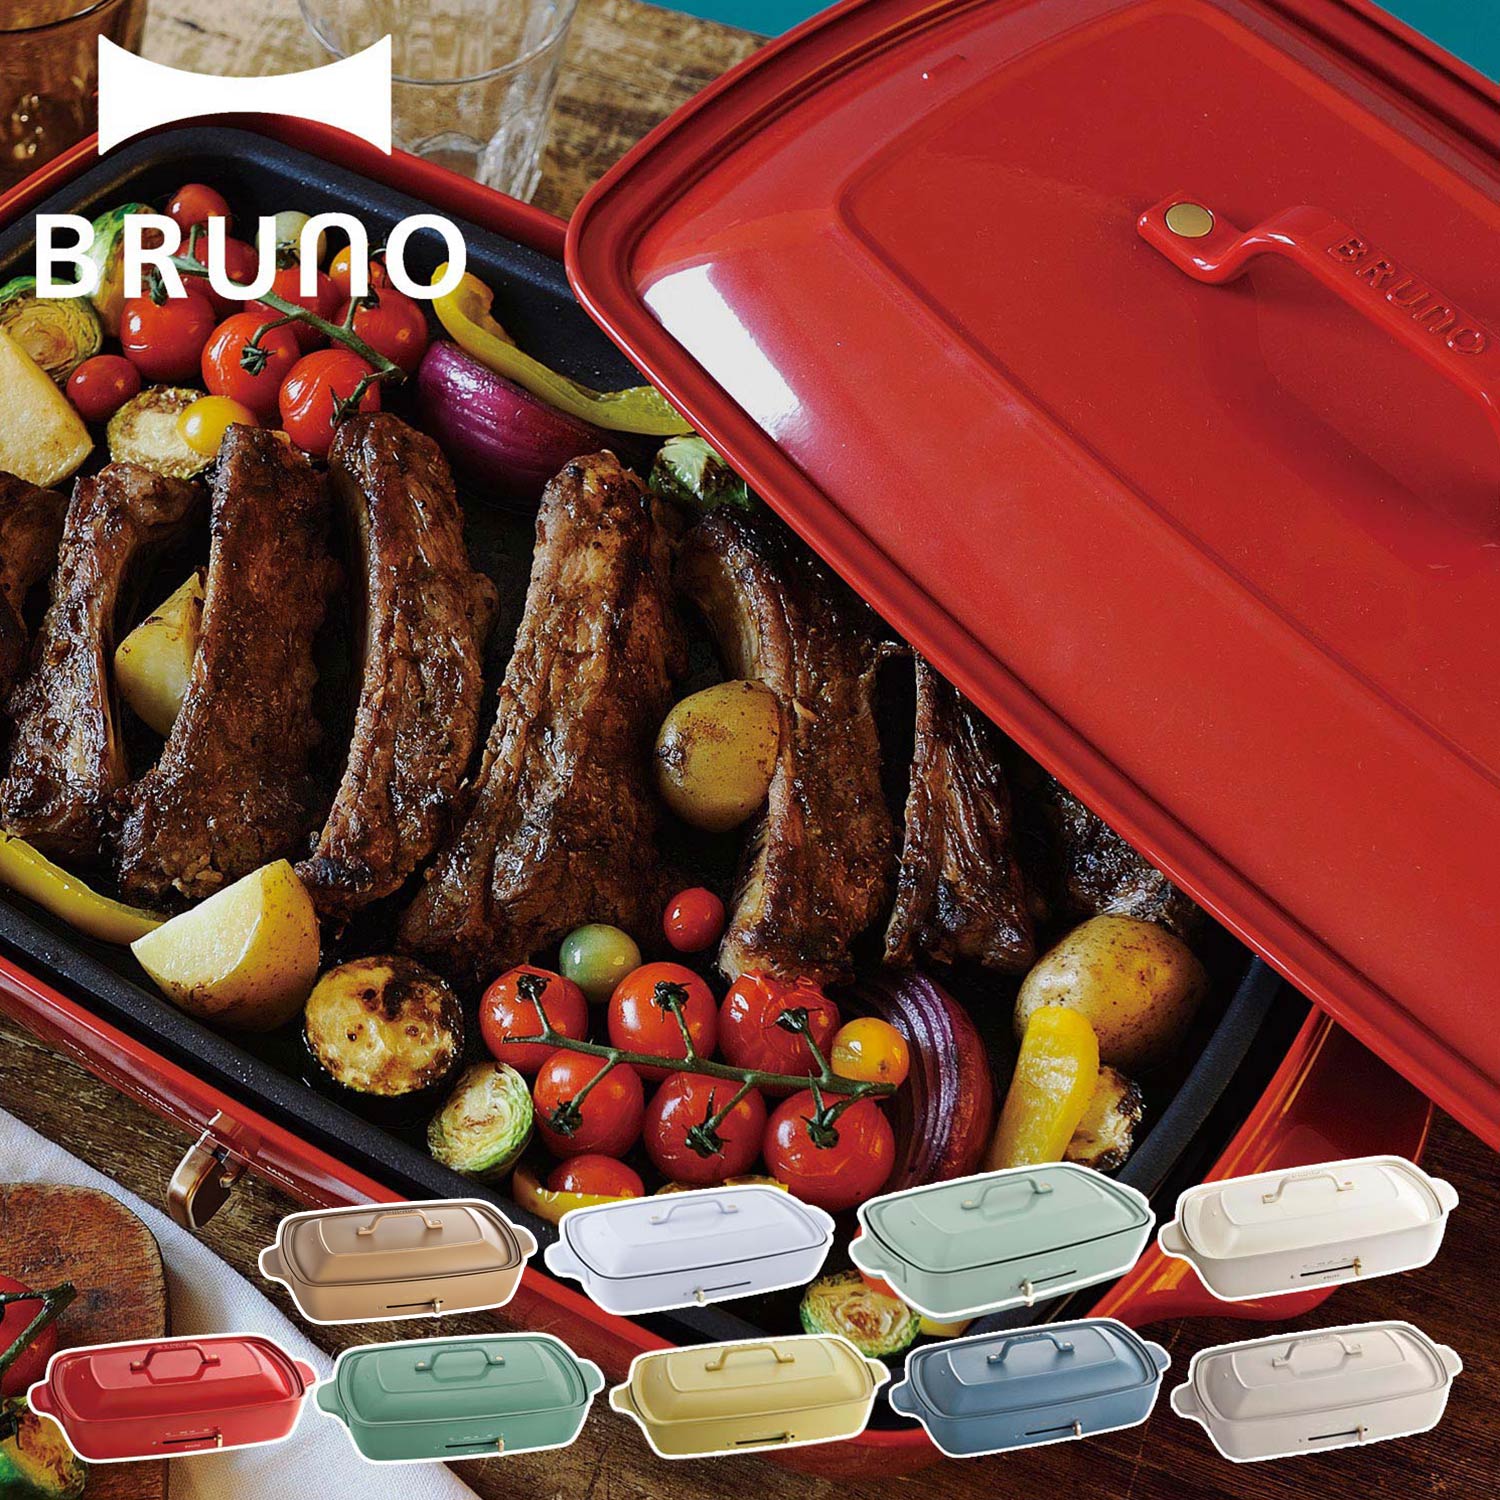 BRUNO ブルーノ ホットプレート たこ焼き器 焼肉 グランデサイズ 大きめ 平面 電気式 ヒーター式 1200W 大型 大きい パーティ キッチン BOE026